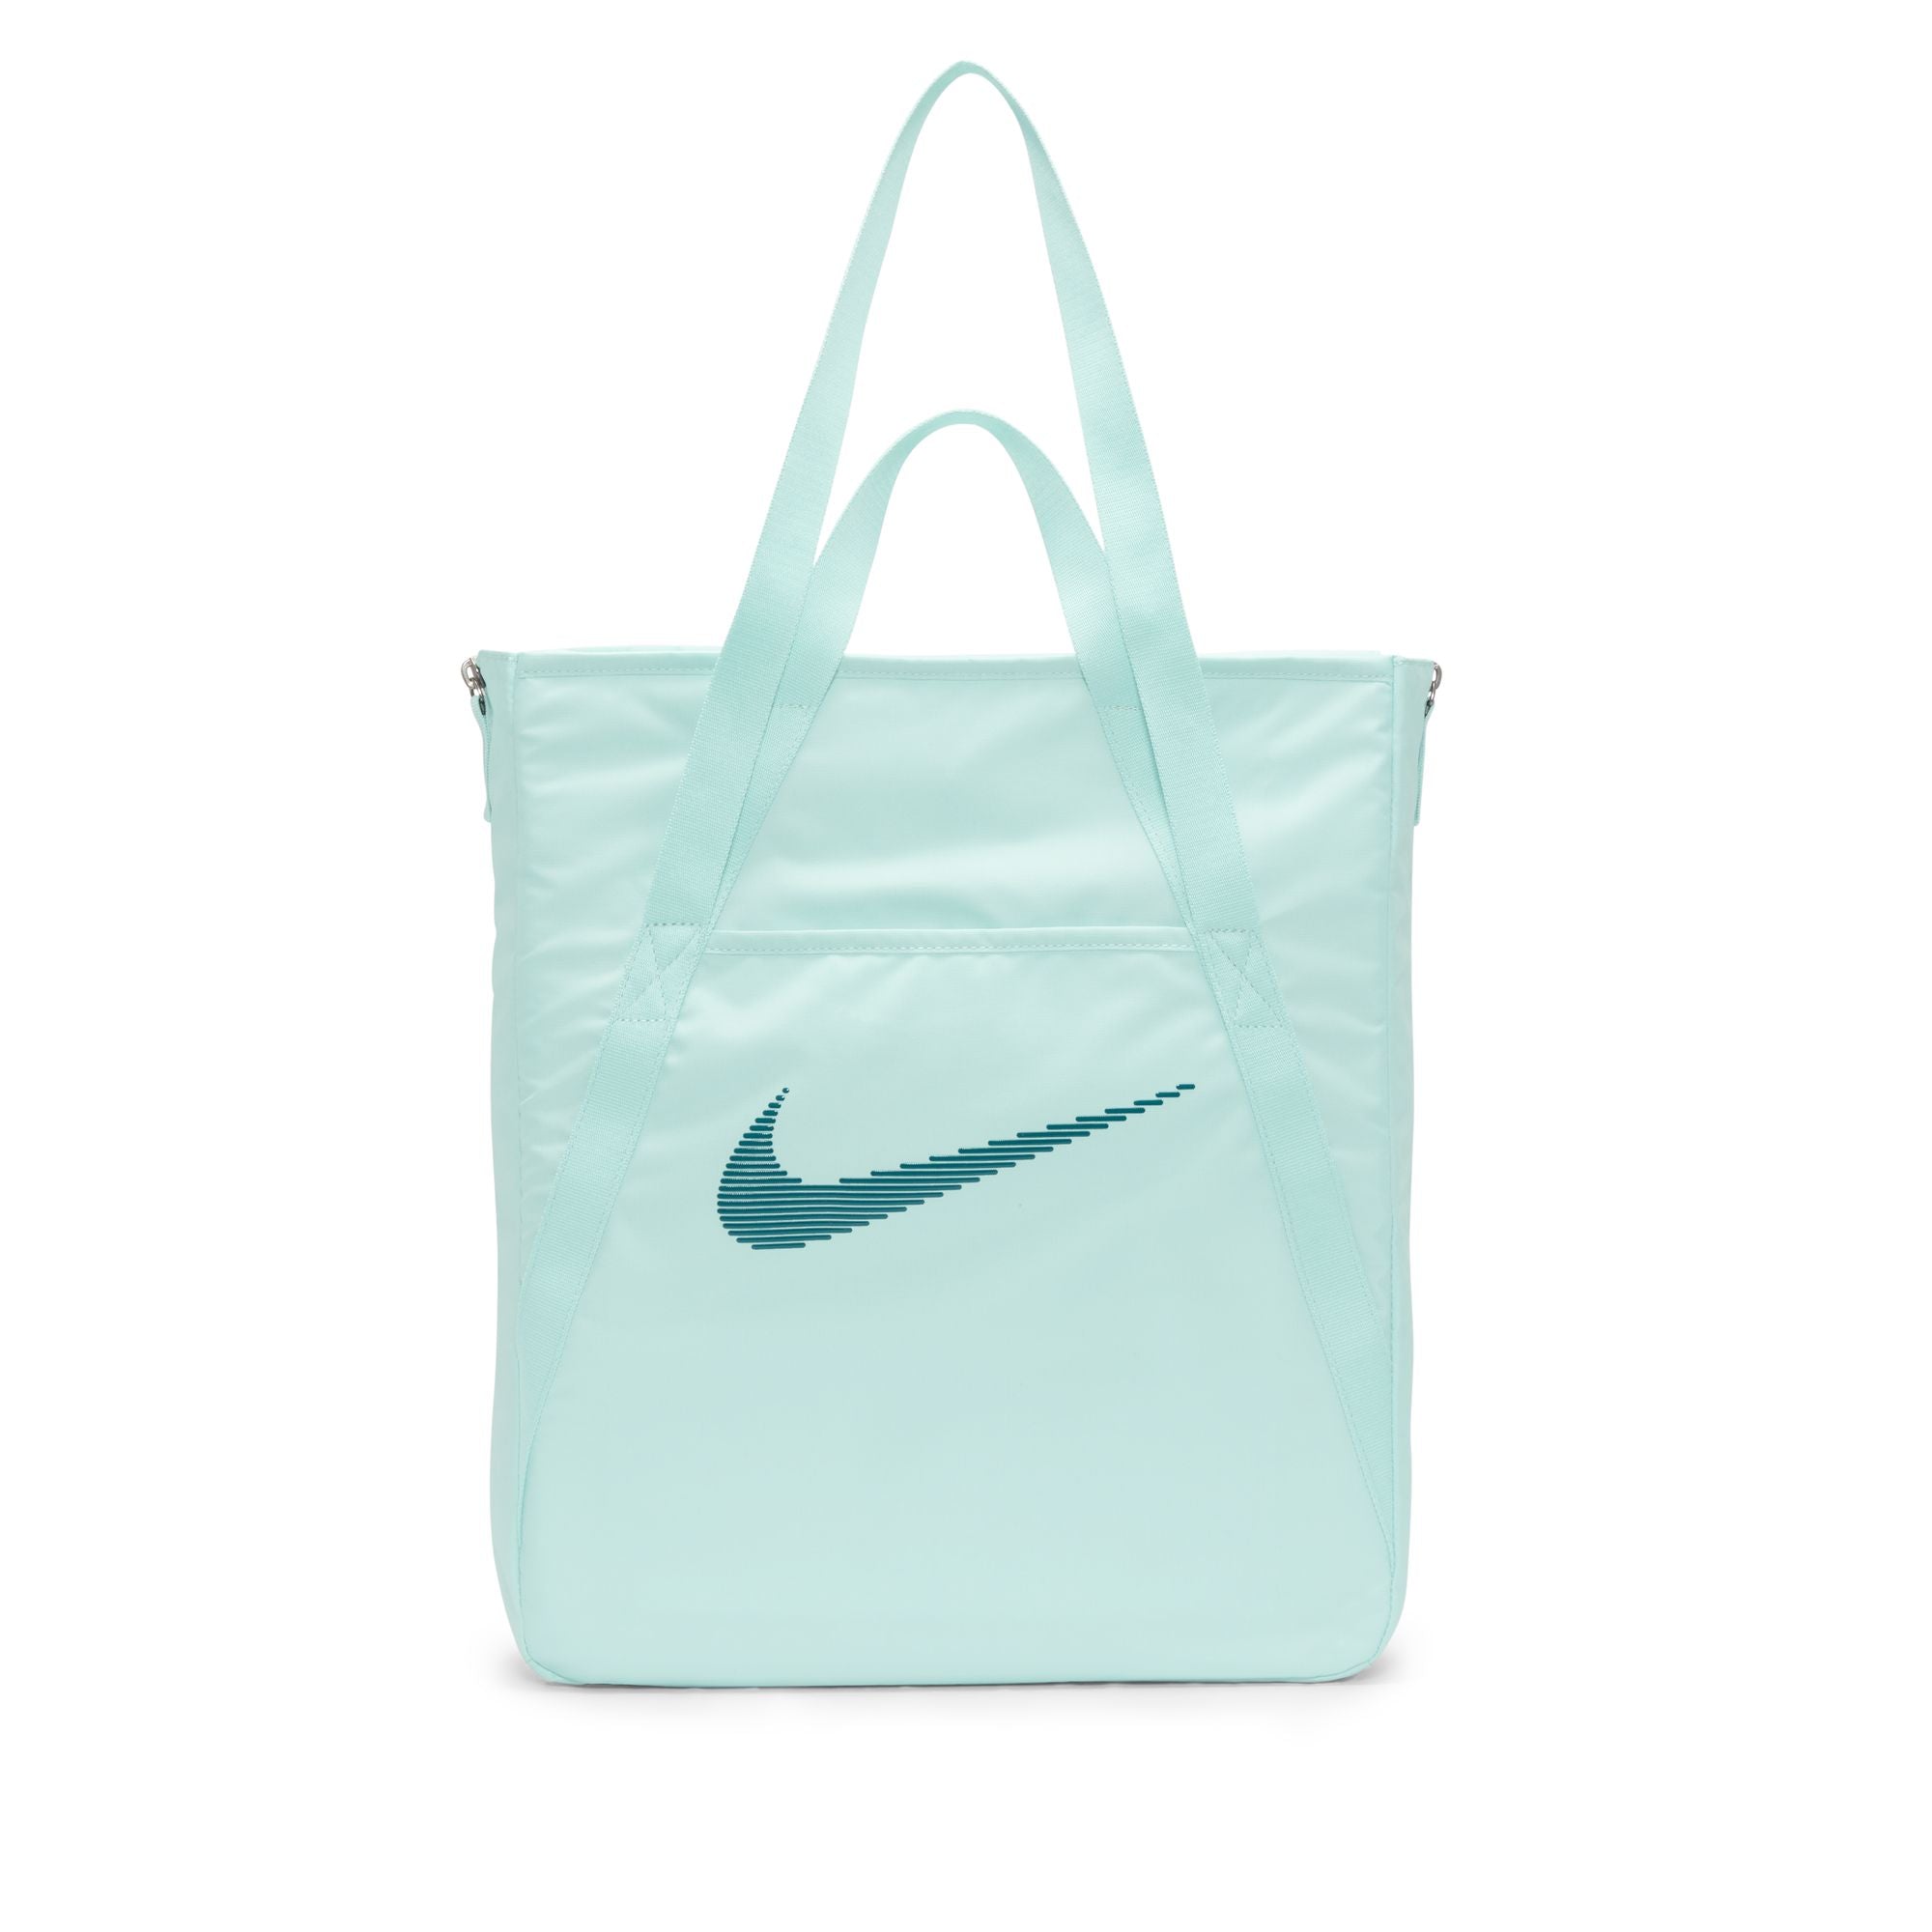 Nike Wmns Futura Luxe Tote Bag Black/Black/Light Smoke Grey CW9303-010